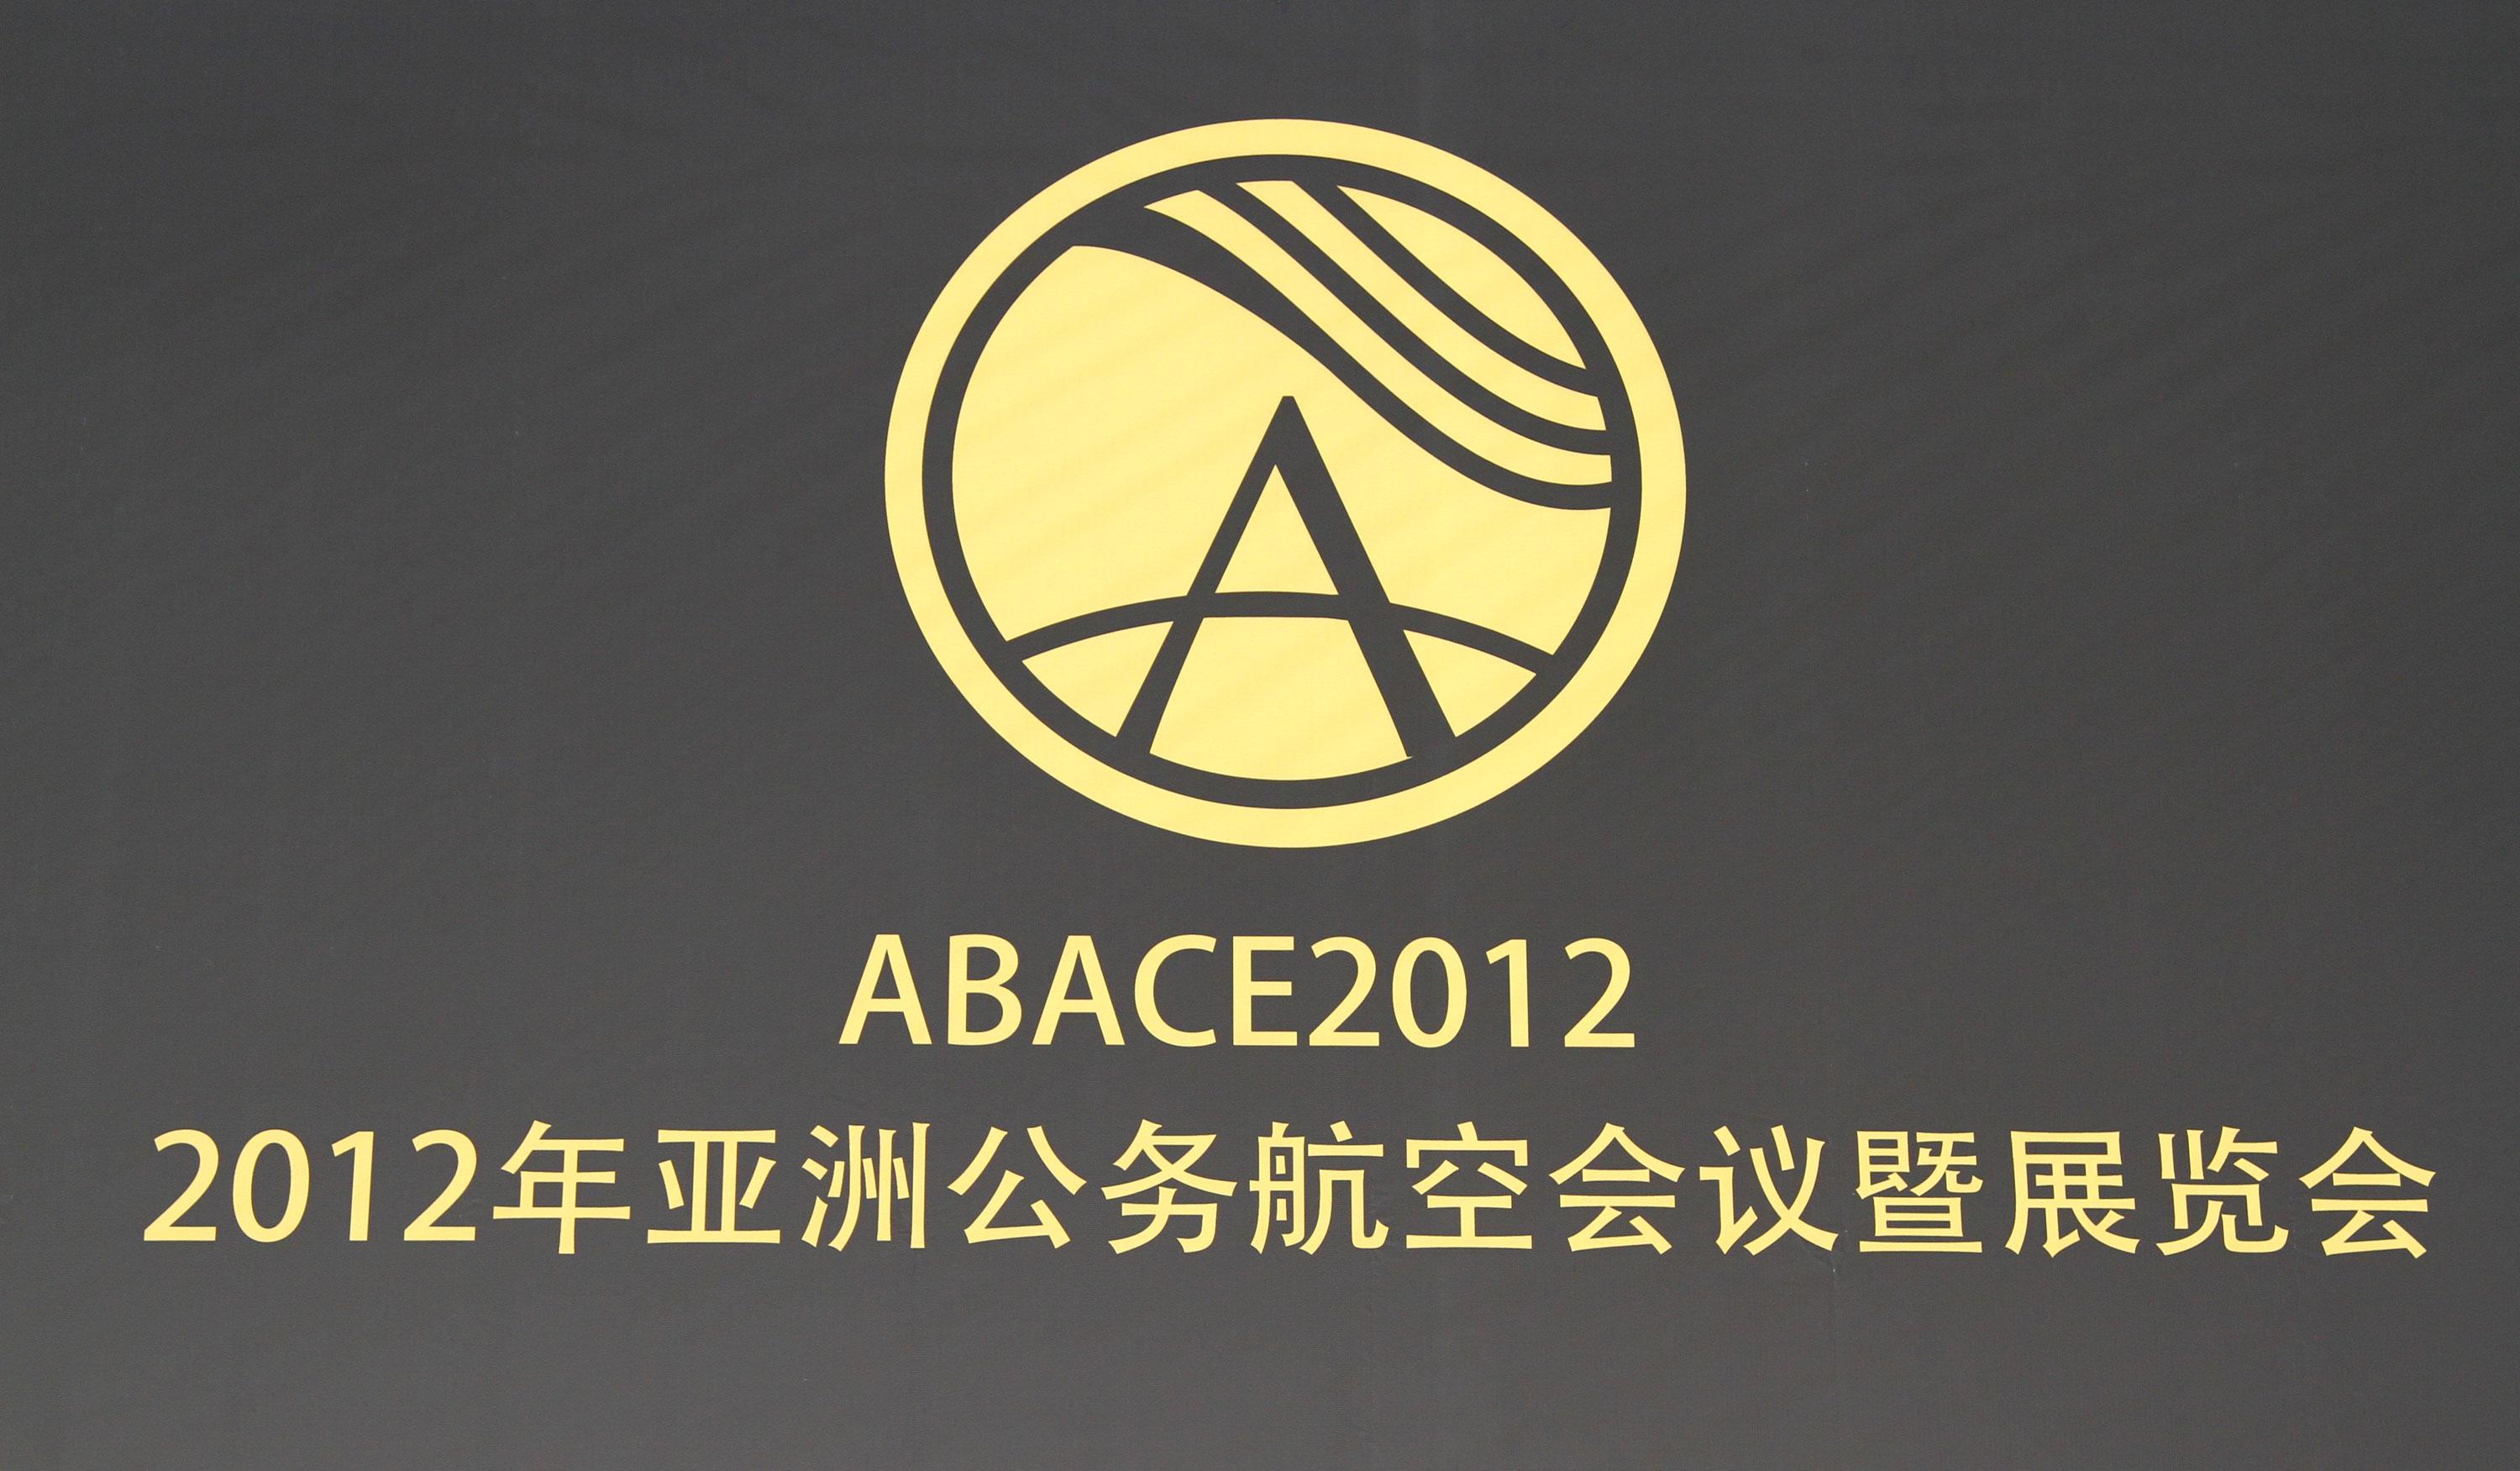 ABACE 2012